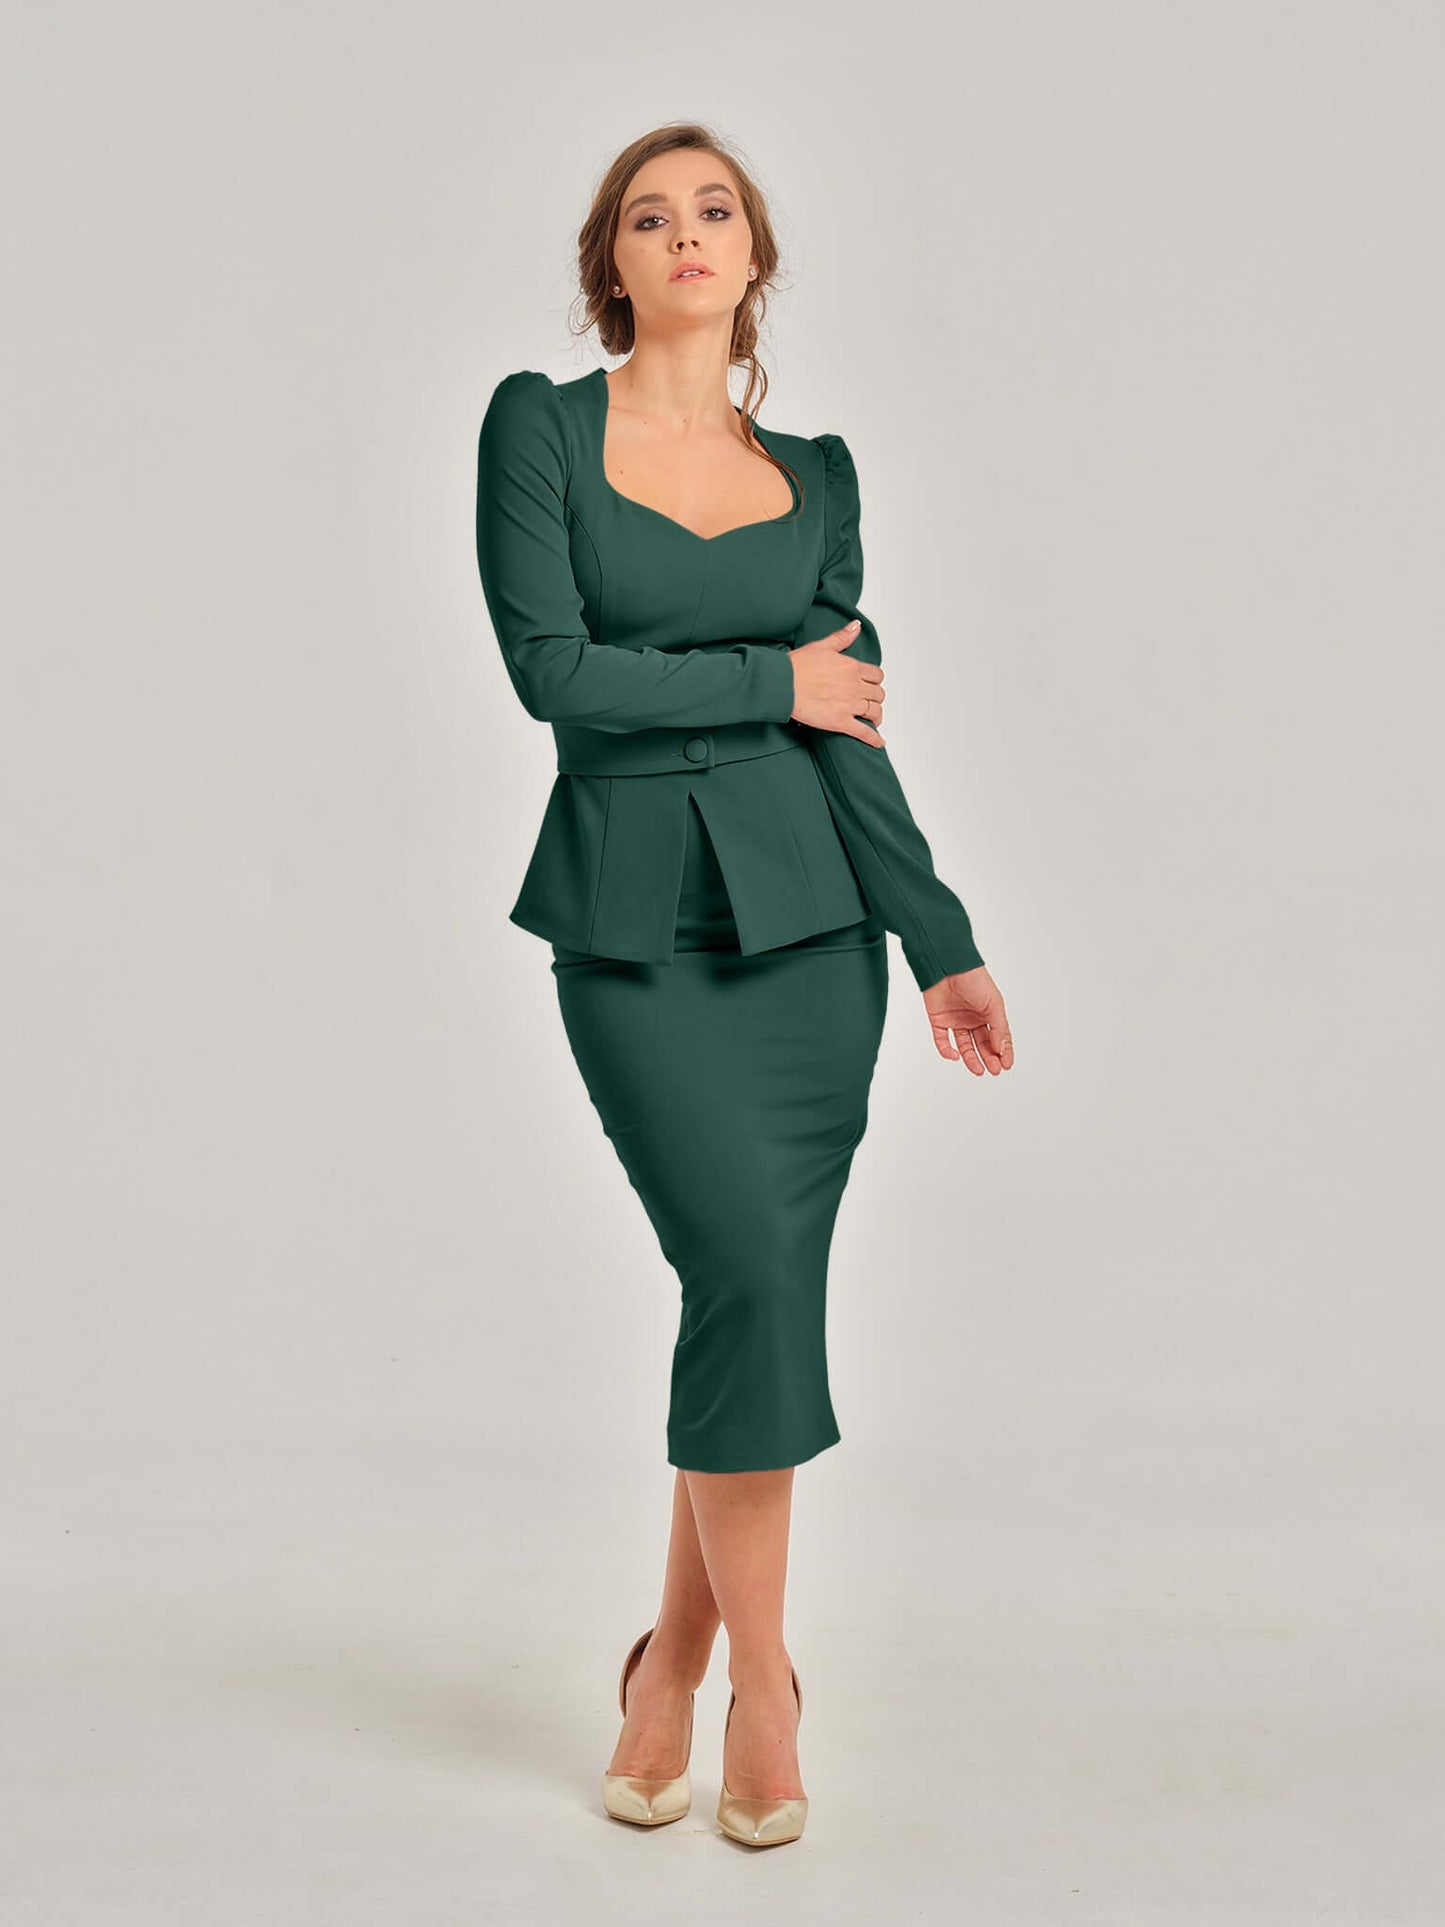 Emerald Dream Sweetheart Blouse by Tia Dorraine Women's Luxury Fashion Designer Clothing Brand